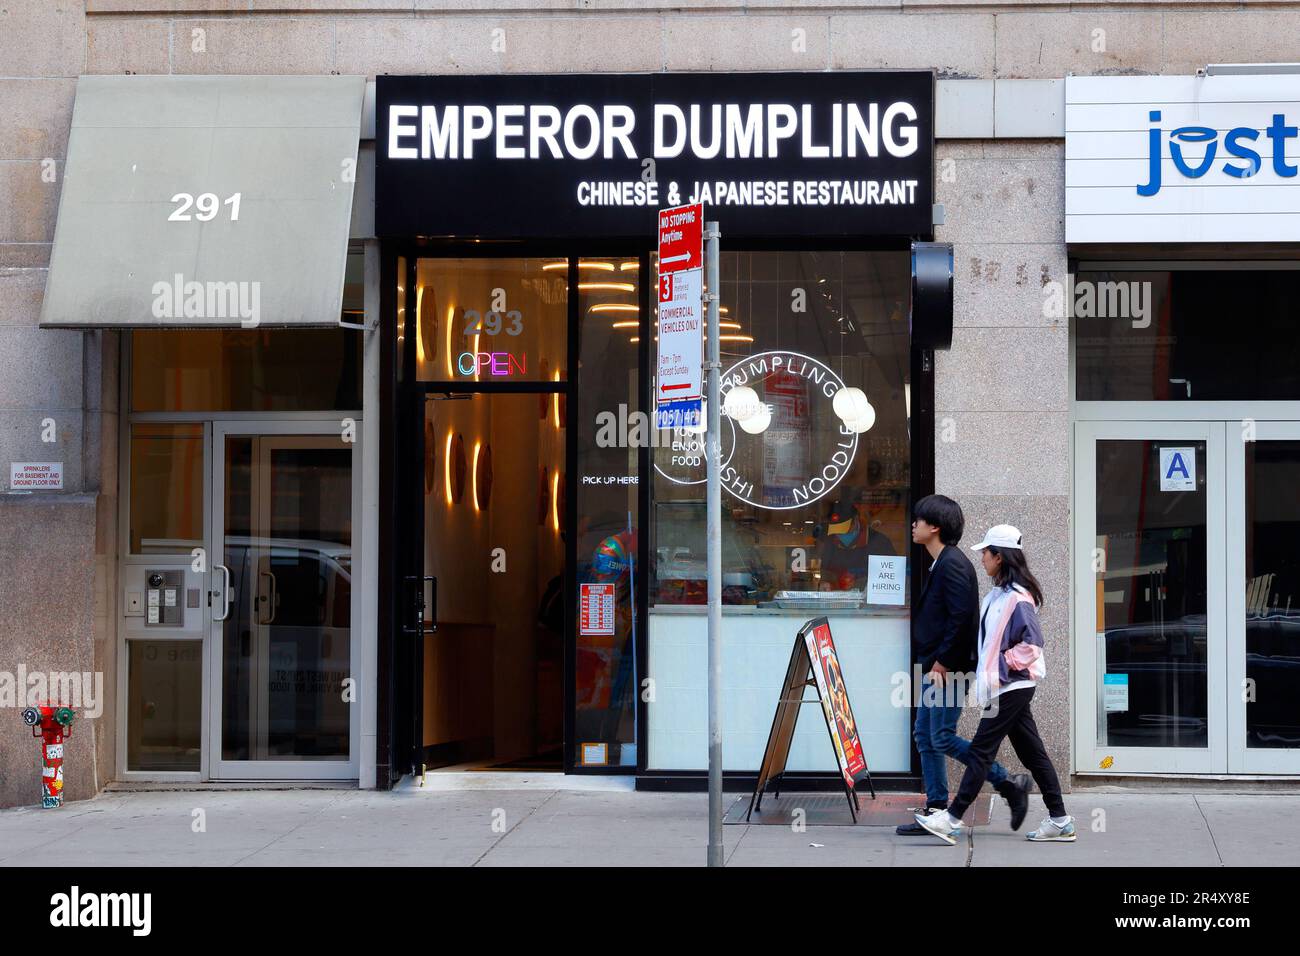 Emperor Dumpling, 293 7th Ave, New York, NYC storefront photo of a Chinese dumpling restaurant in Manhattan's Chelsea neighborhood. Stock Photo